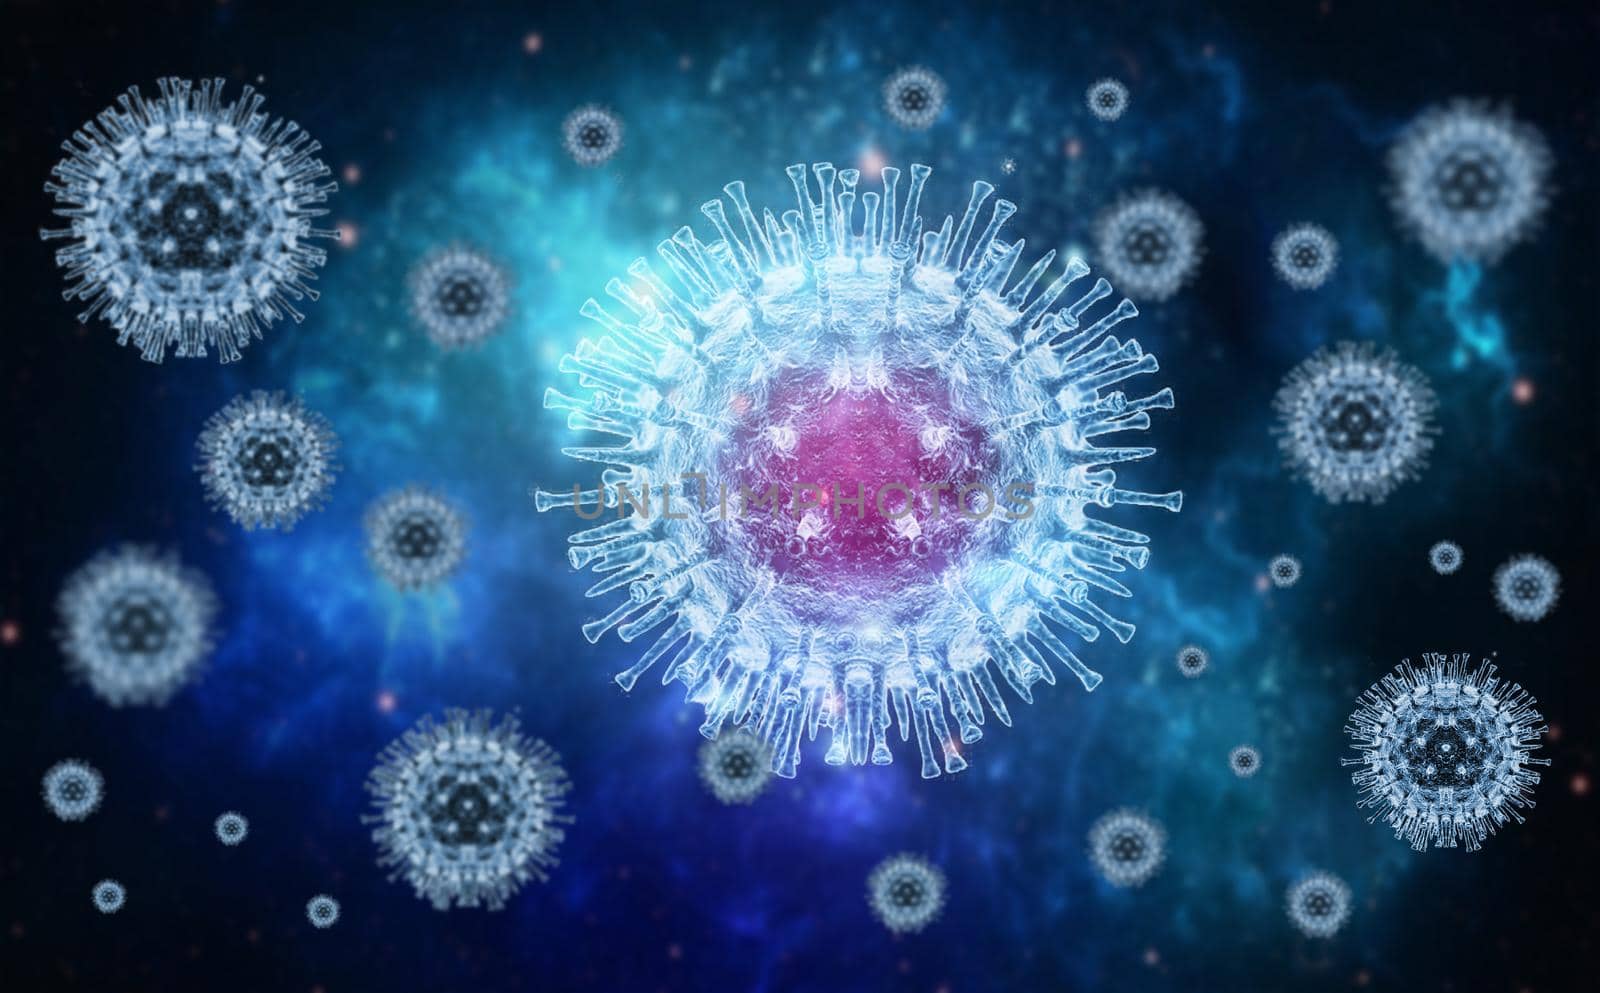 Monkeypox virus, 3d virus background, monkeypox virus molecule on blue background, medical background with virus molecules by isaiphoto